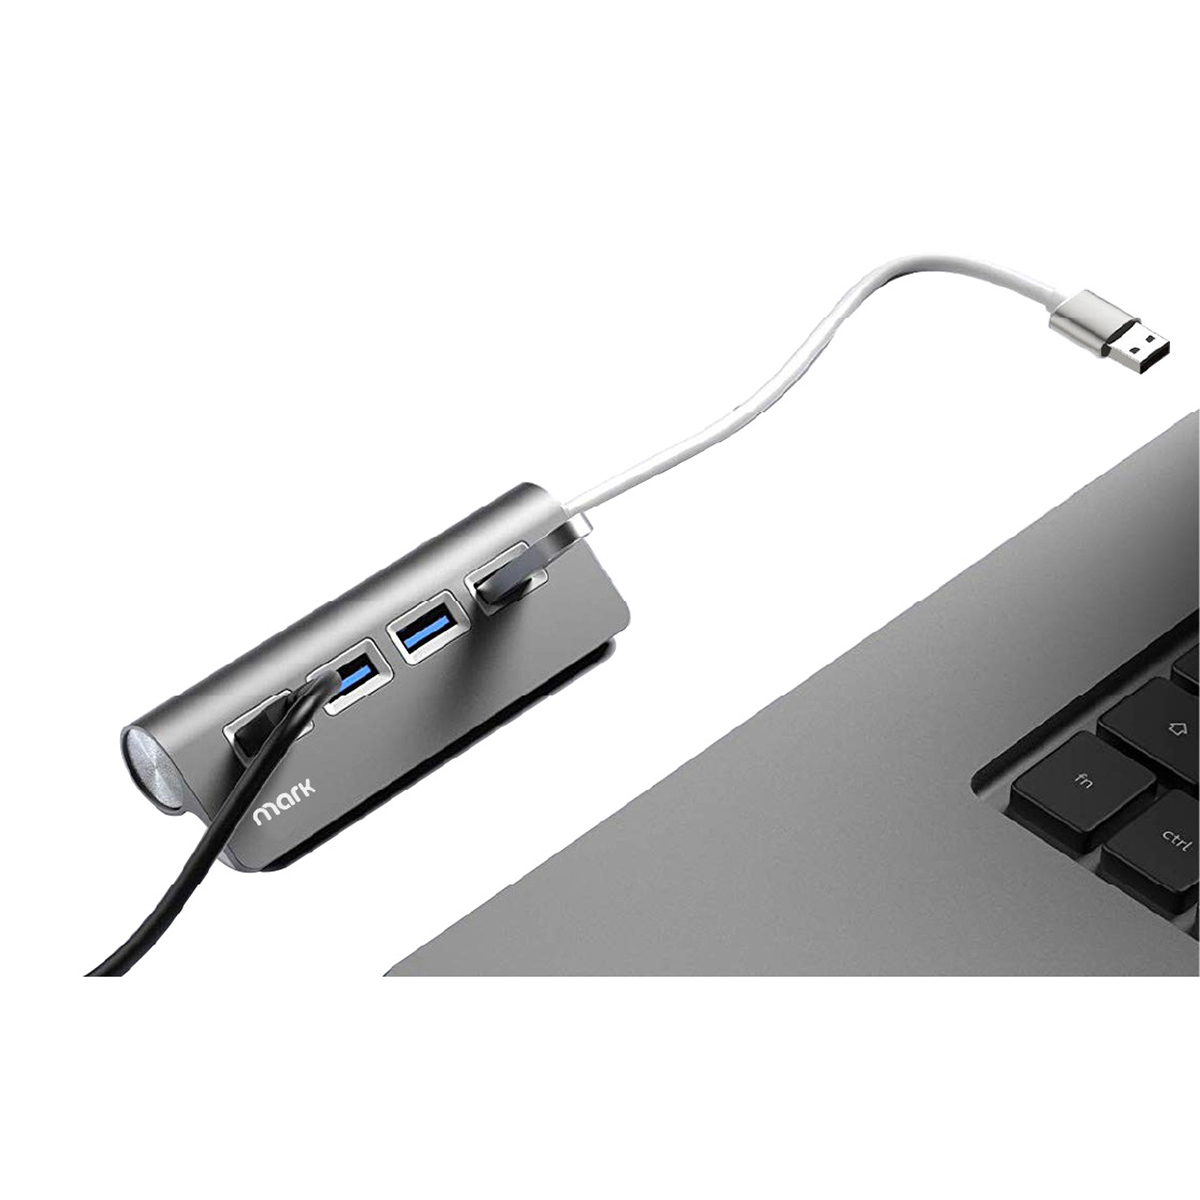 LAN Adapter,USB Extension,HDMI&VGA,Cable TYPE C,Charger,USB HUB,Cardreader,USB Converter